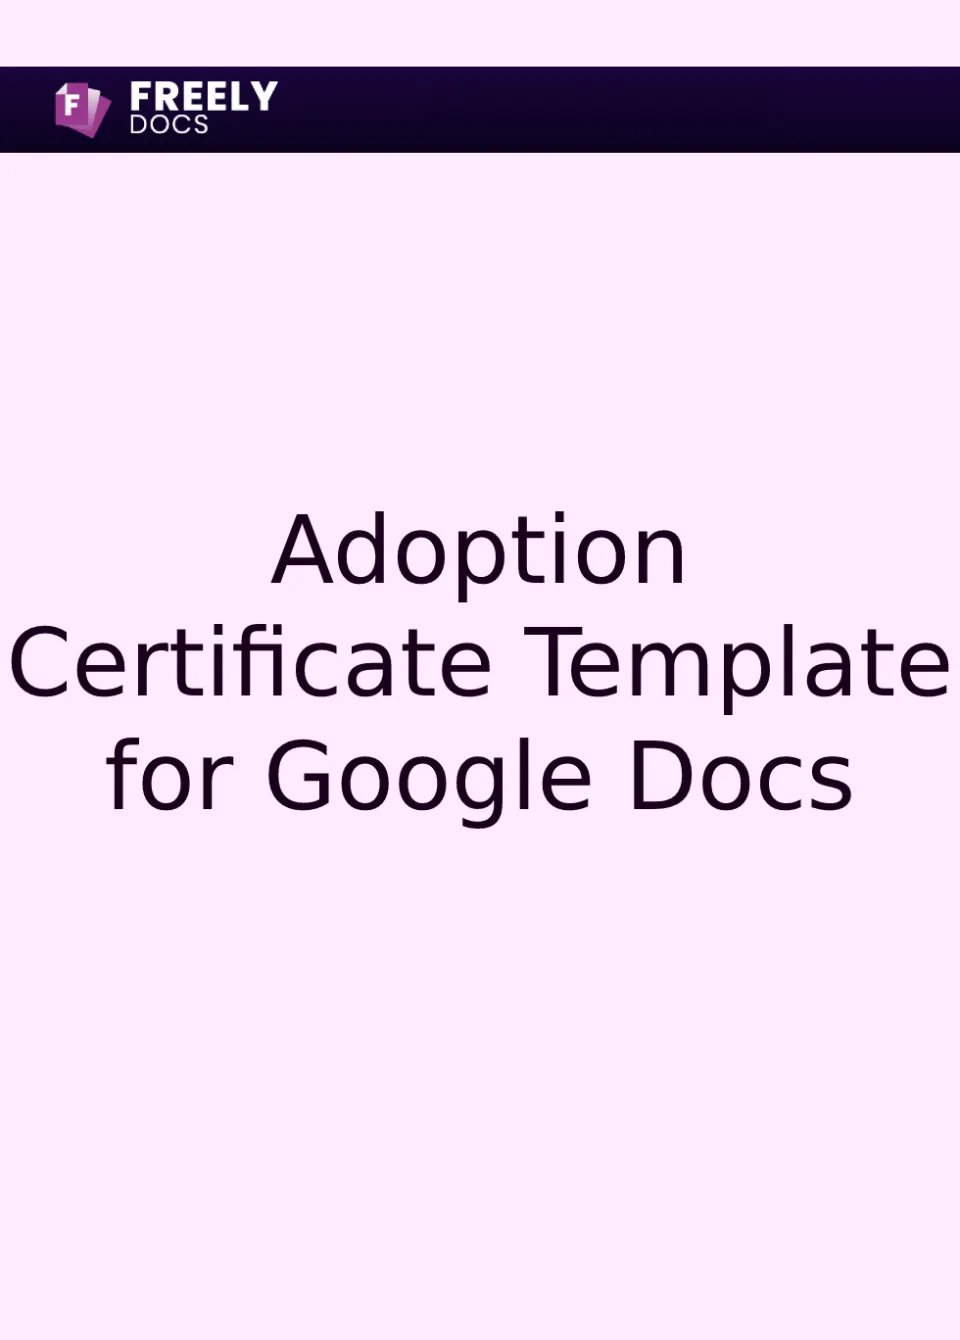 Adoption Certificate Template For Google Docs